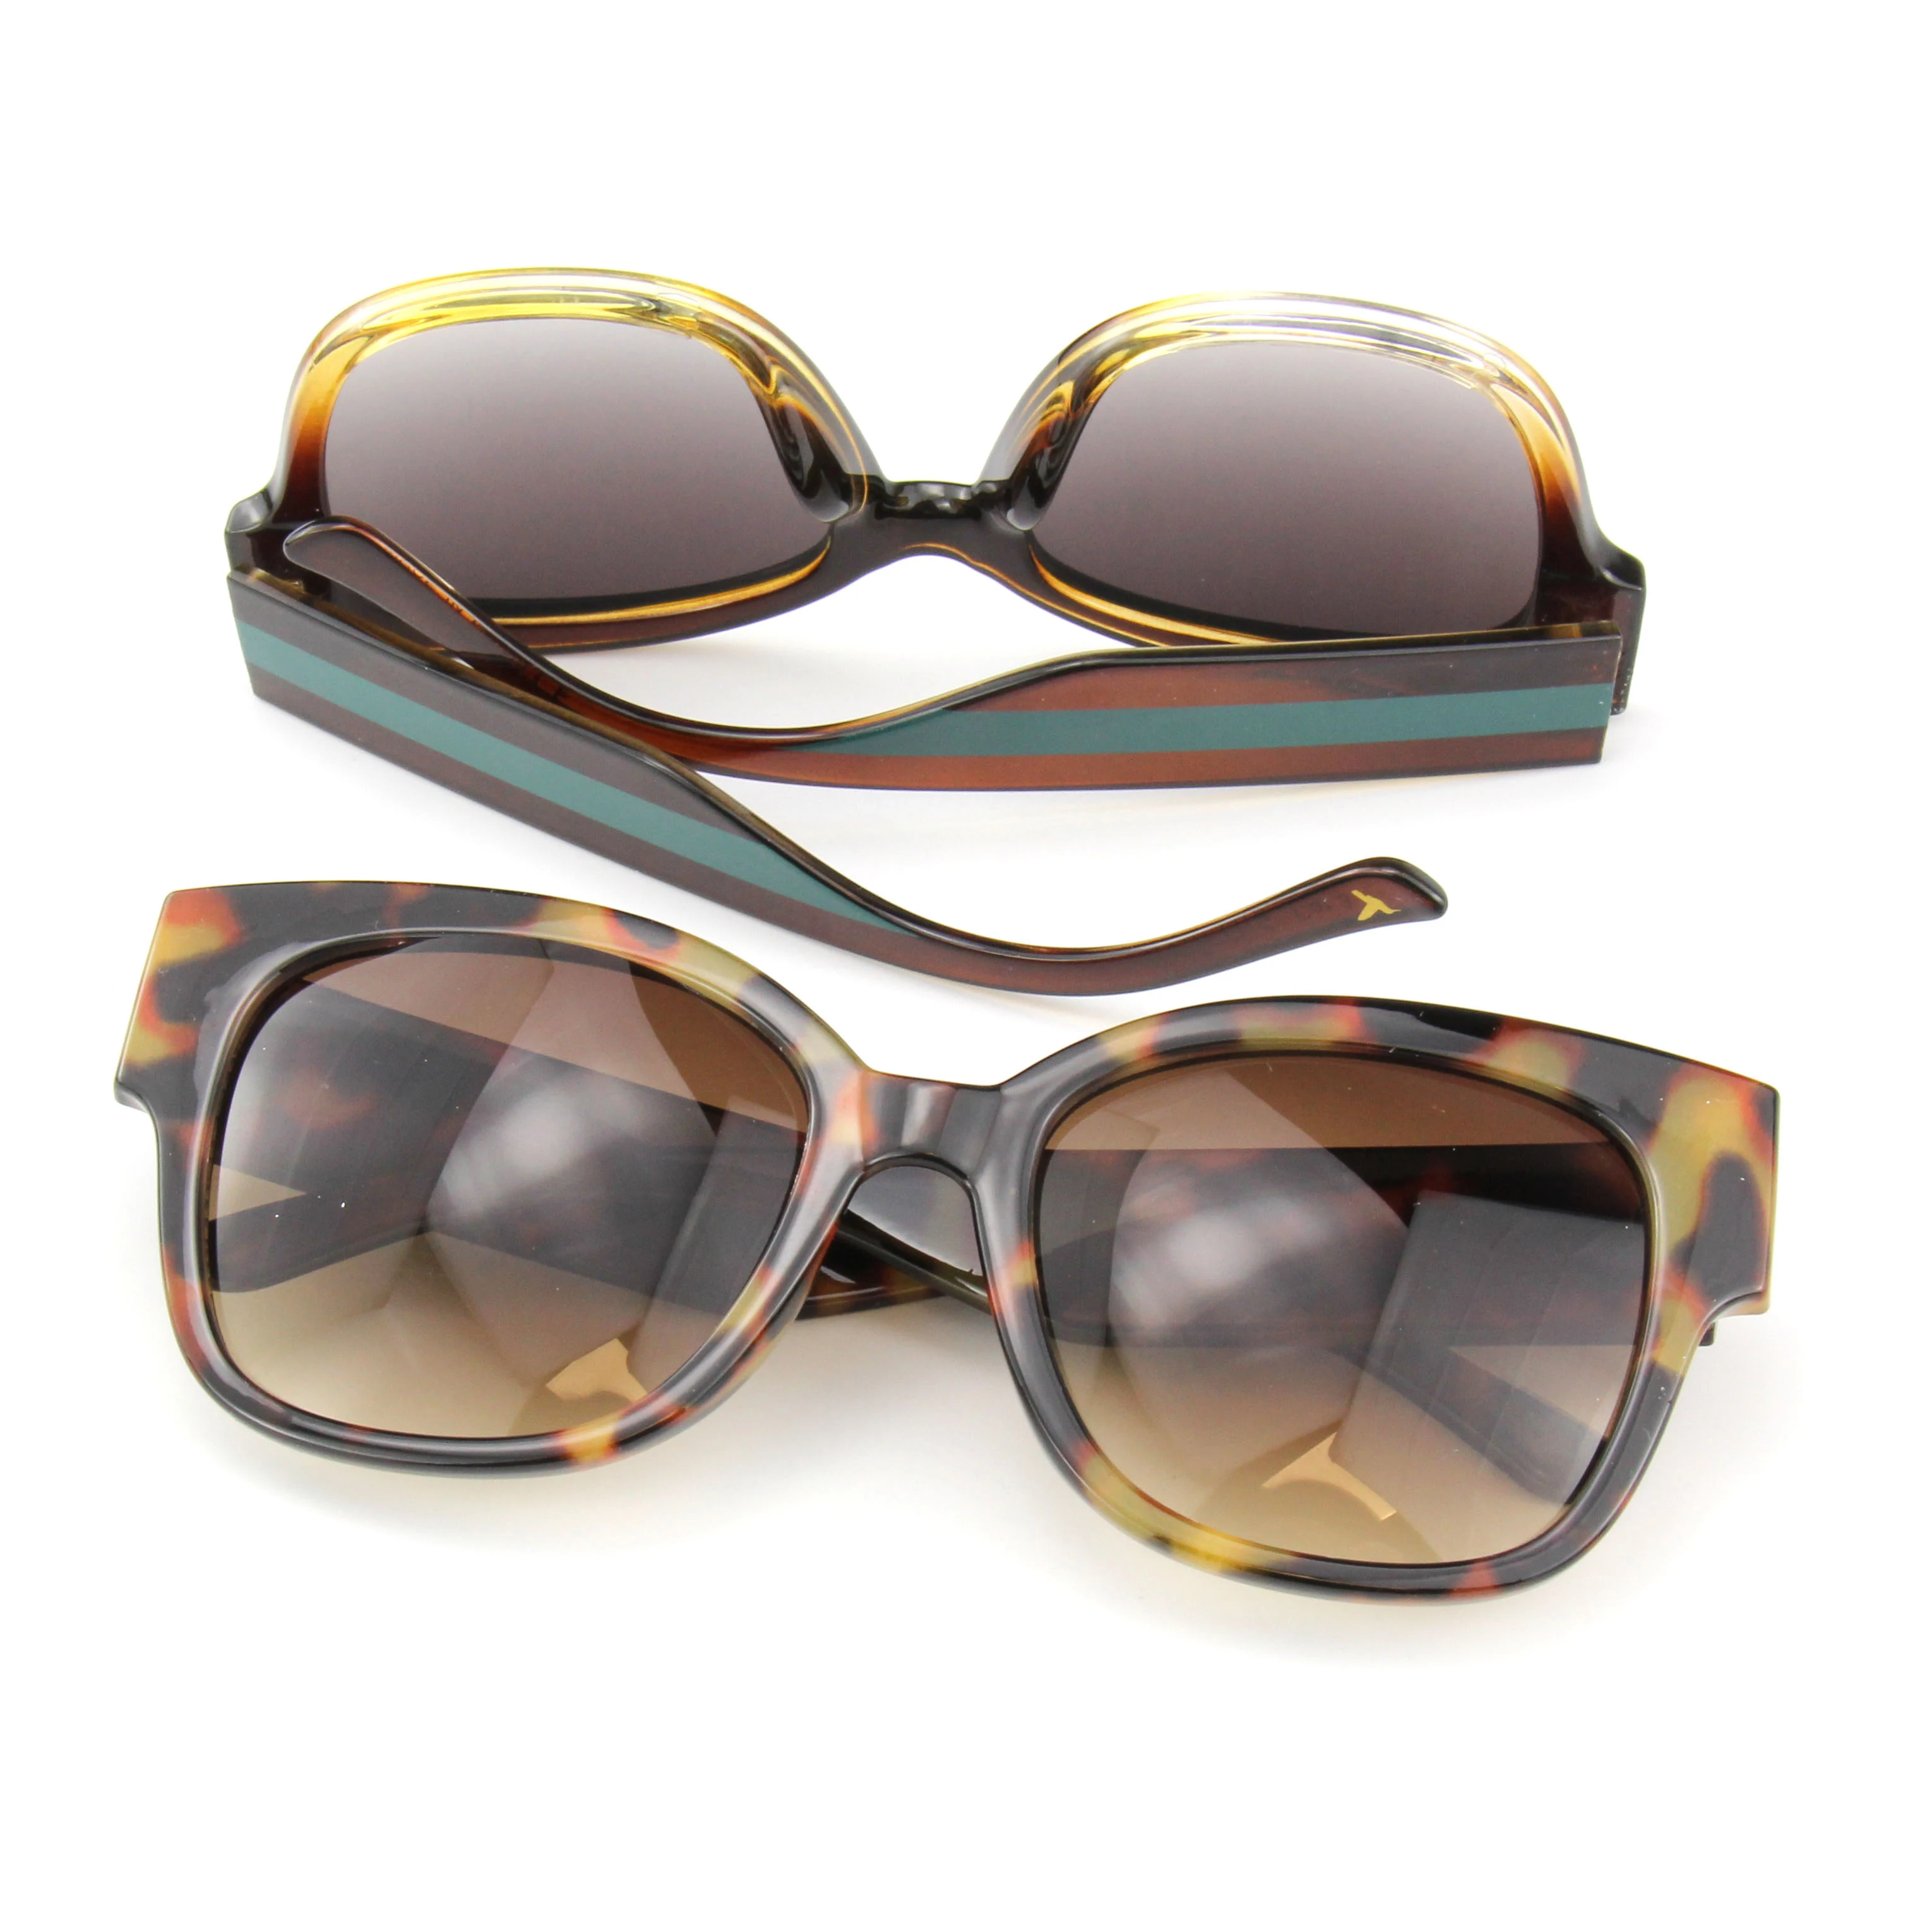 EUGENIA new trendy UV400 polarized square oversized women men shield sunglasses 2021  2020